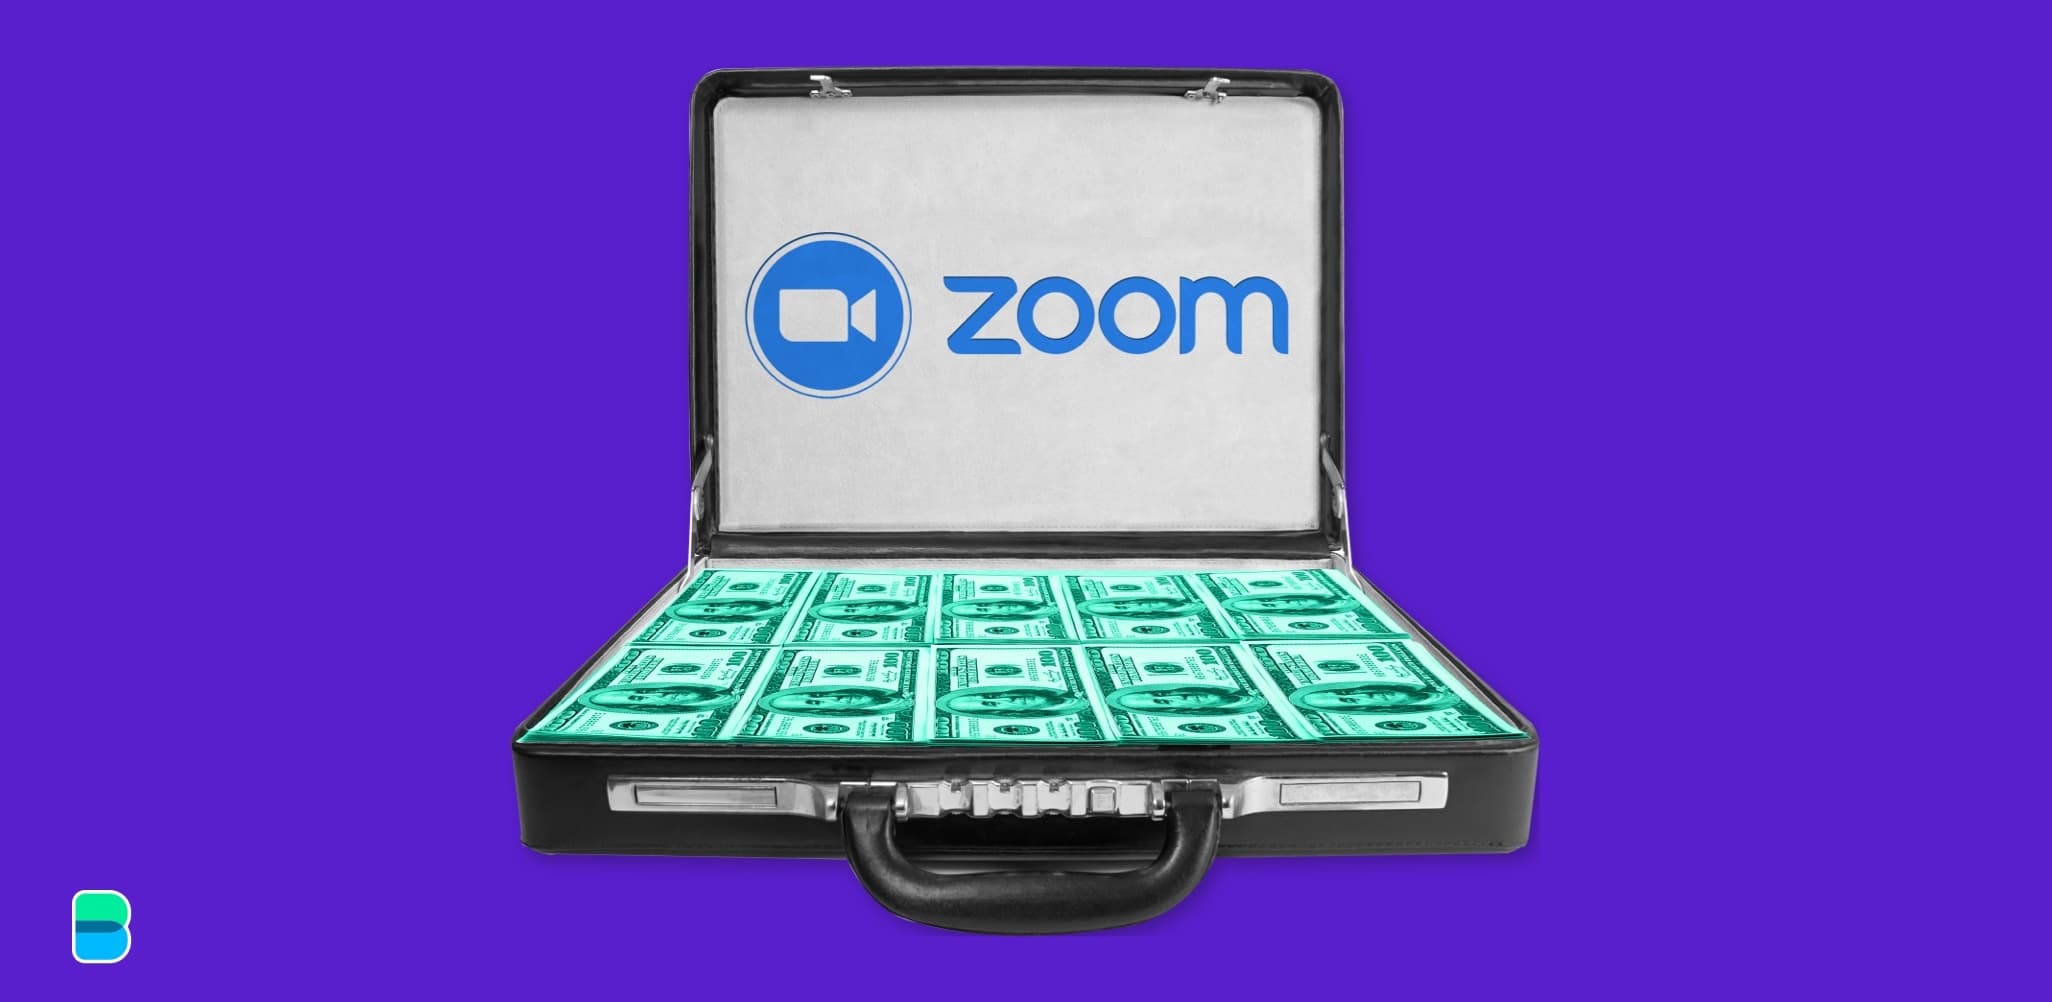 A billion-dollar quarter for Zoom